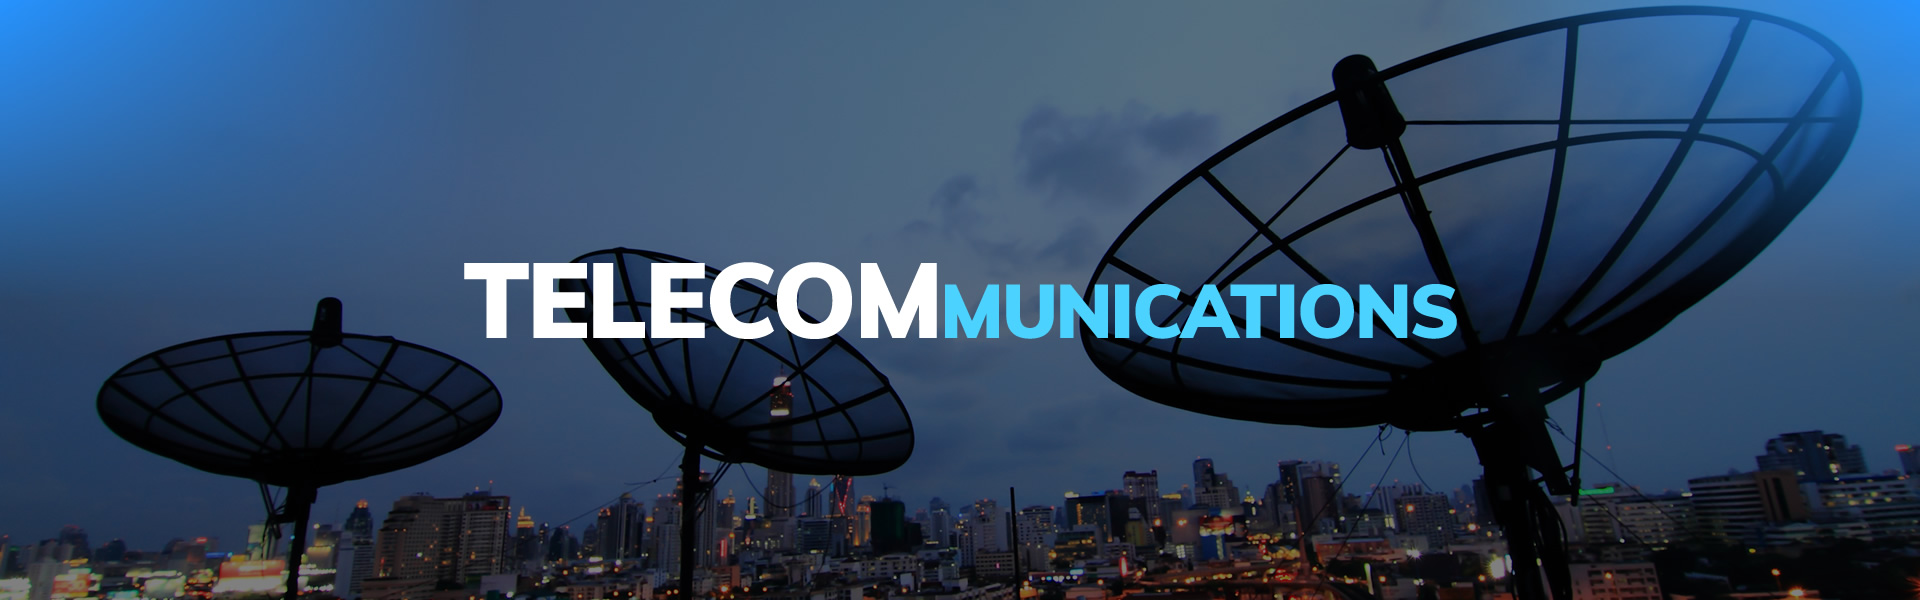 MSc in Telecommunications